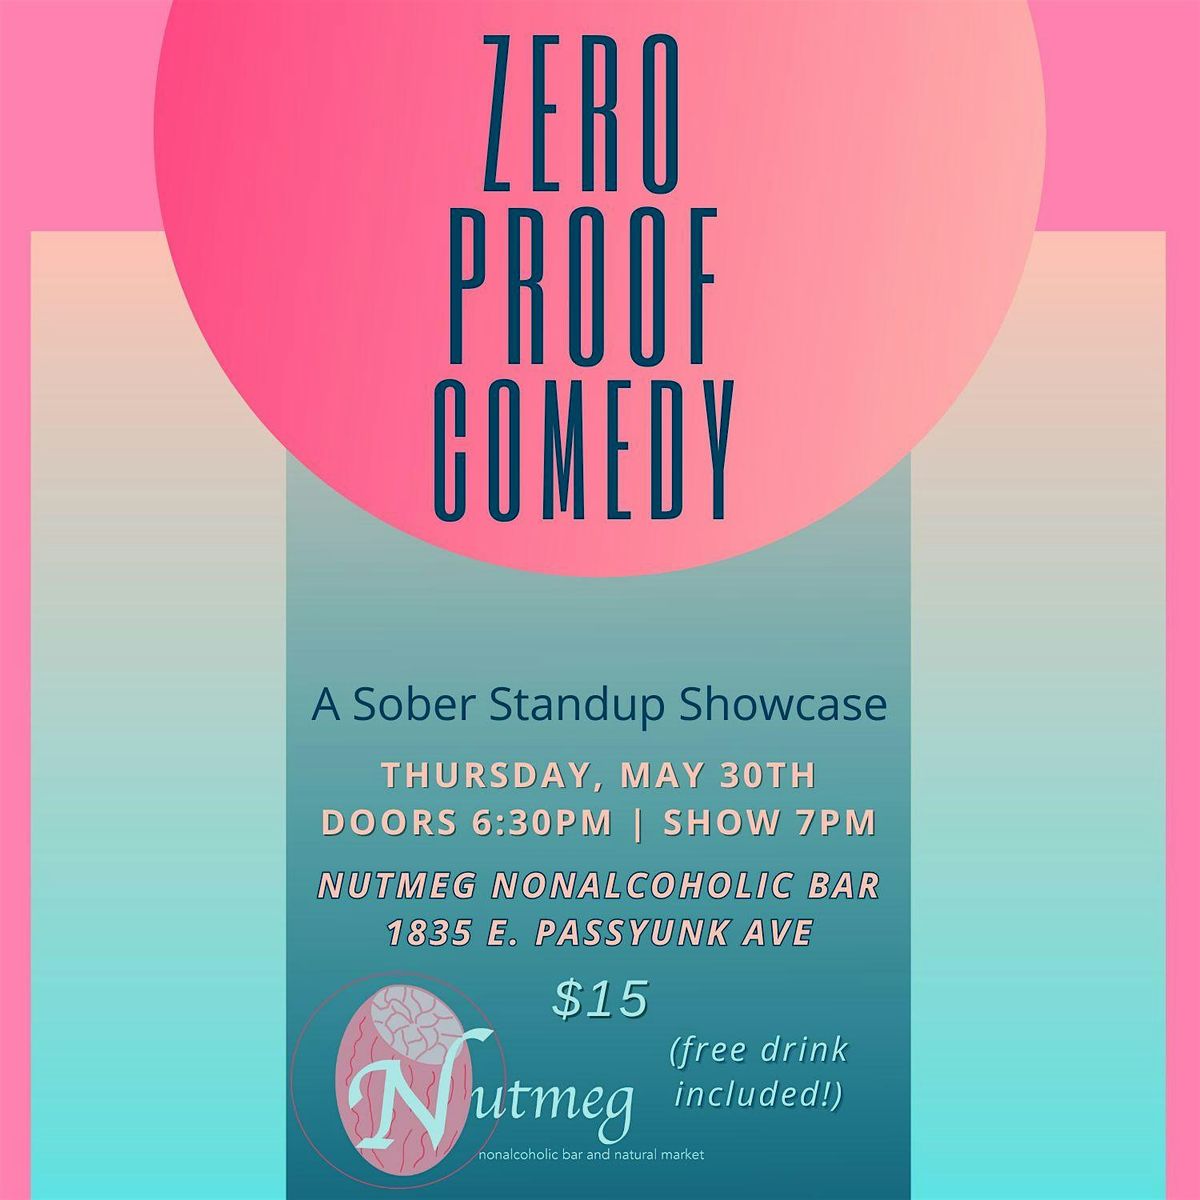 Zero Proof Comedy - A Sober Standup Showcase